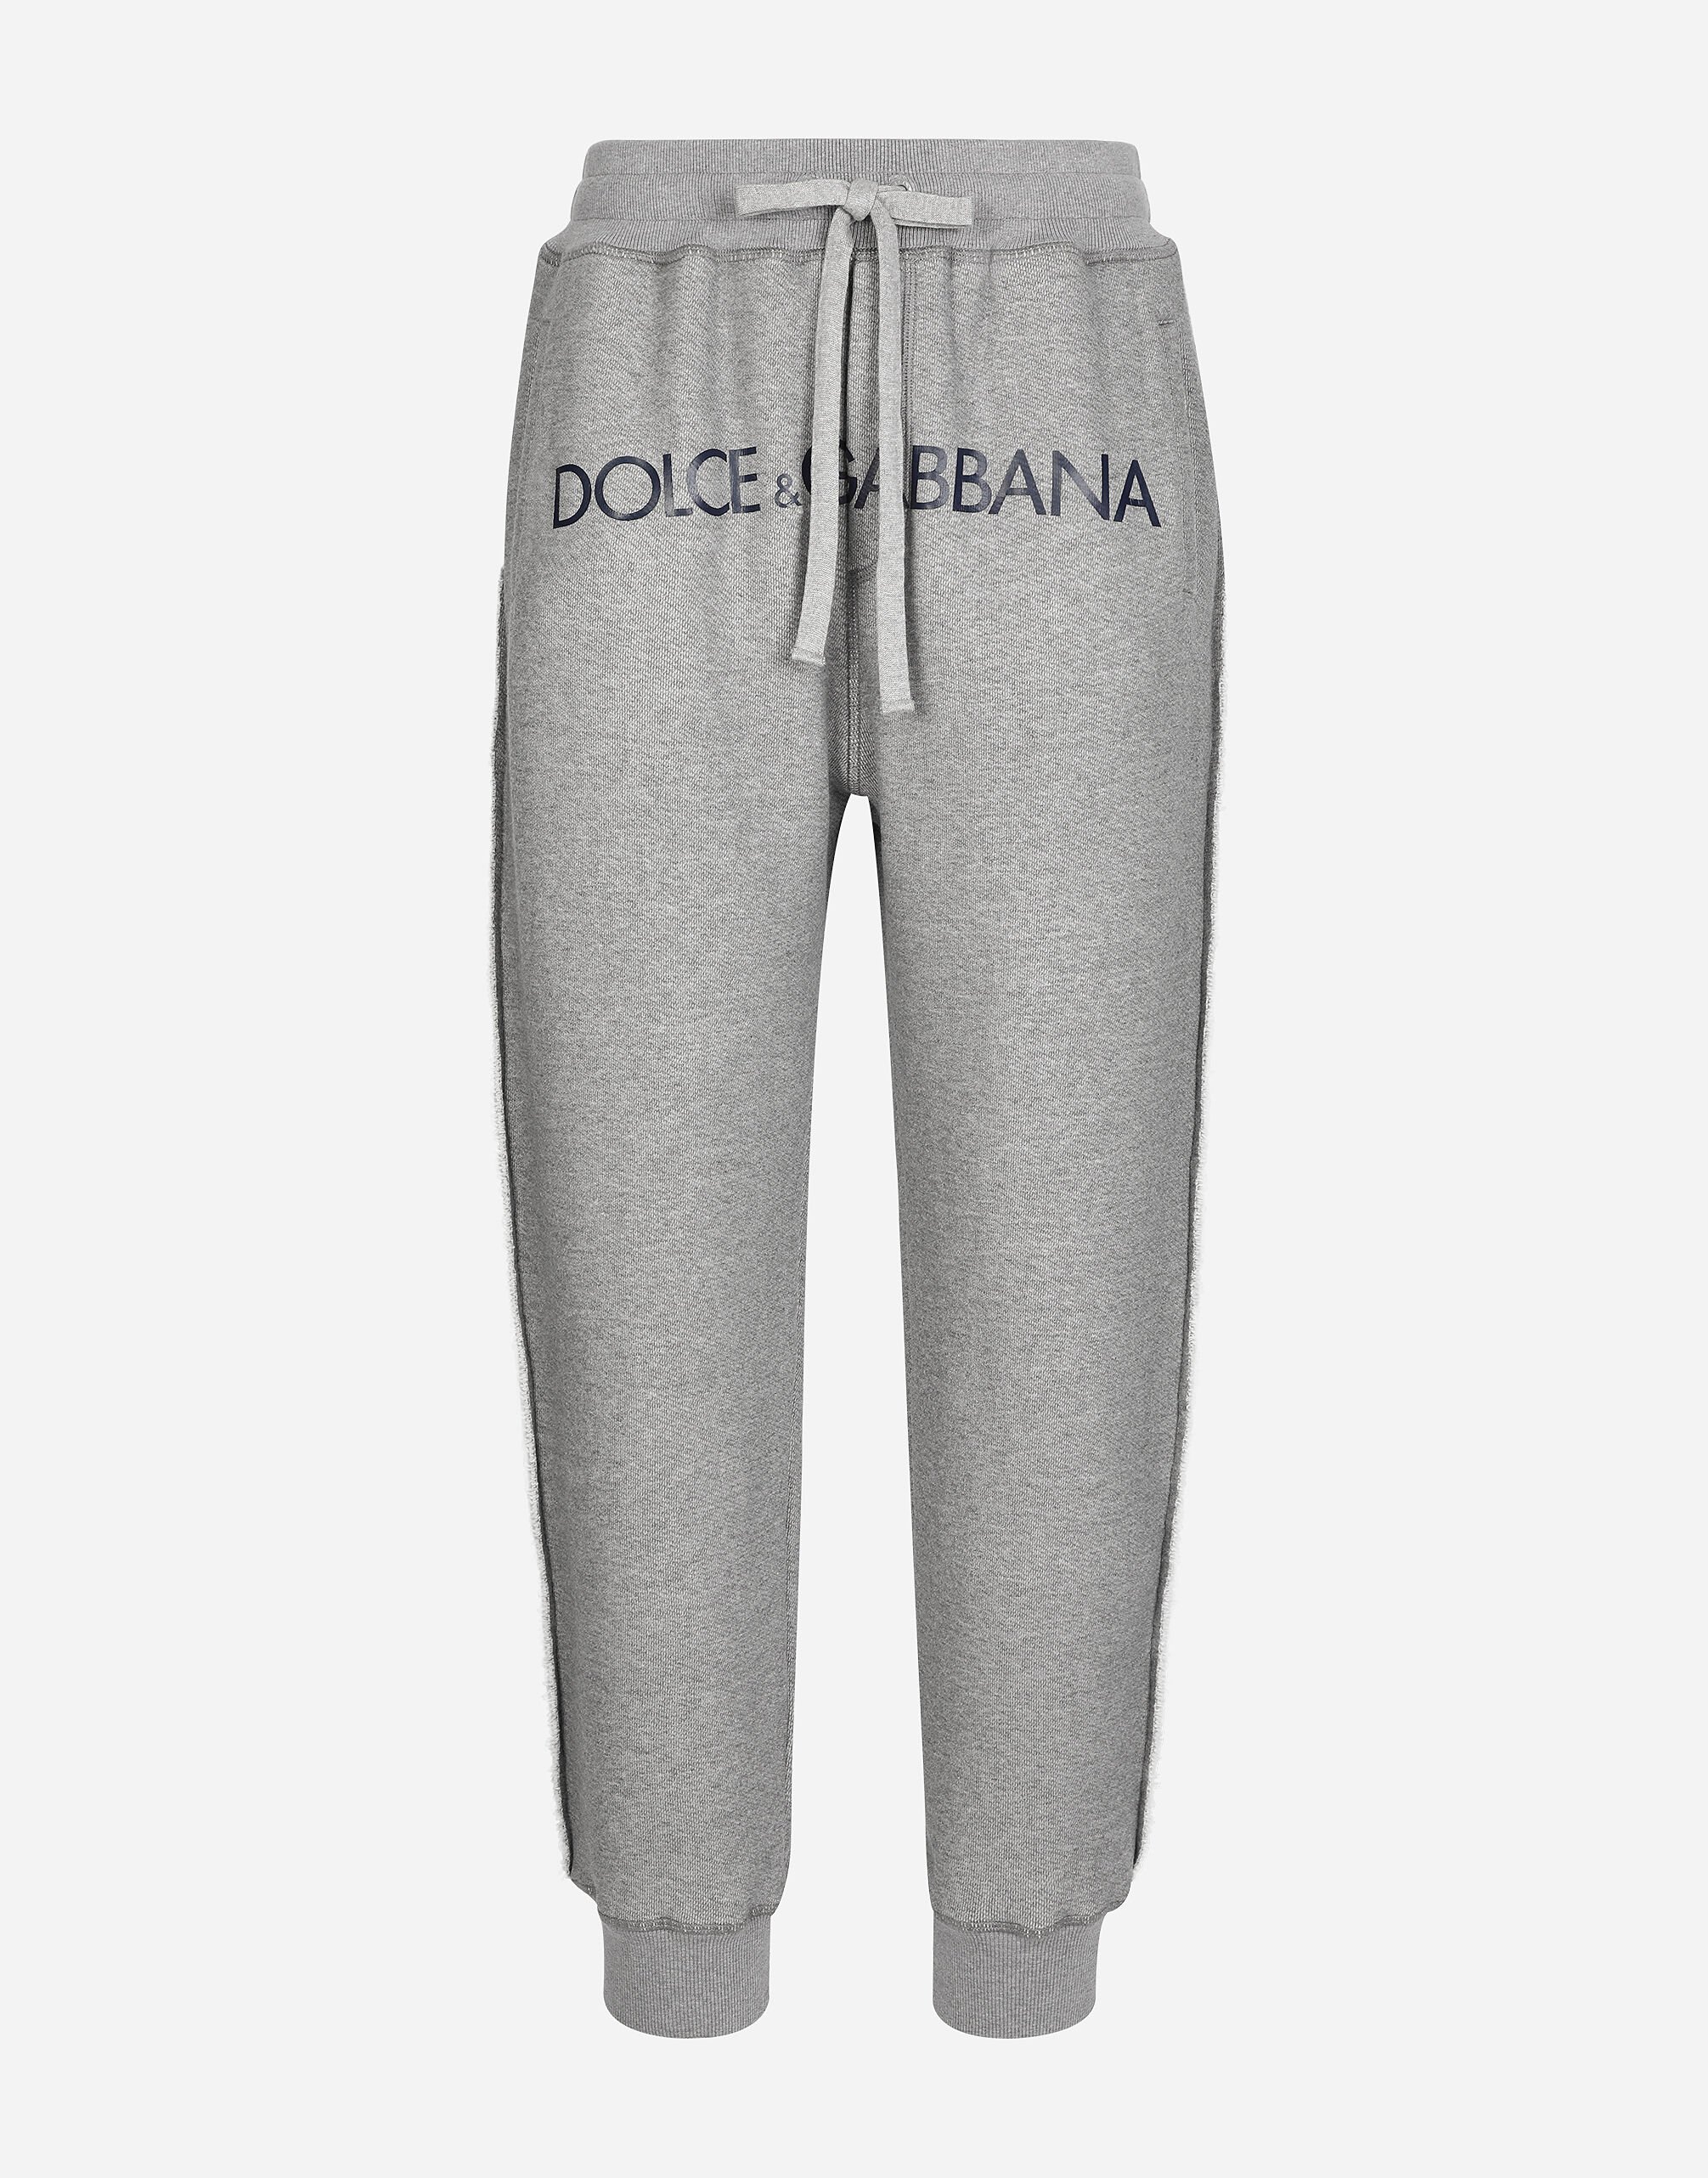 Dolce & Gabbana Jogging pants with Dolce&Gabbana logo Black GV5TATGH253